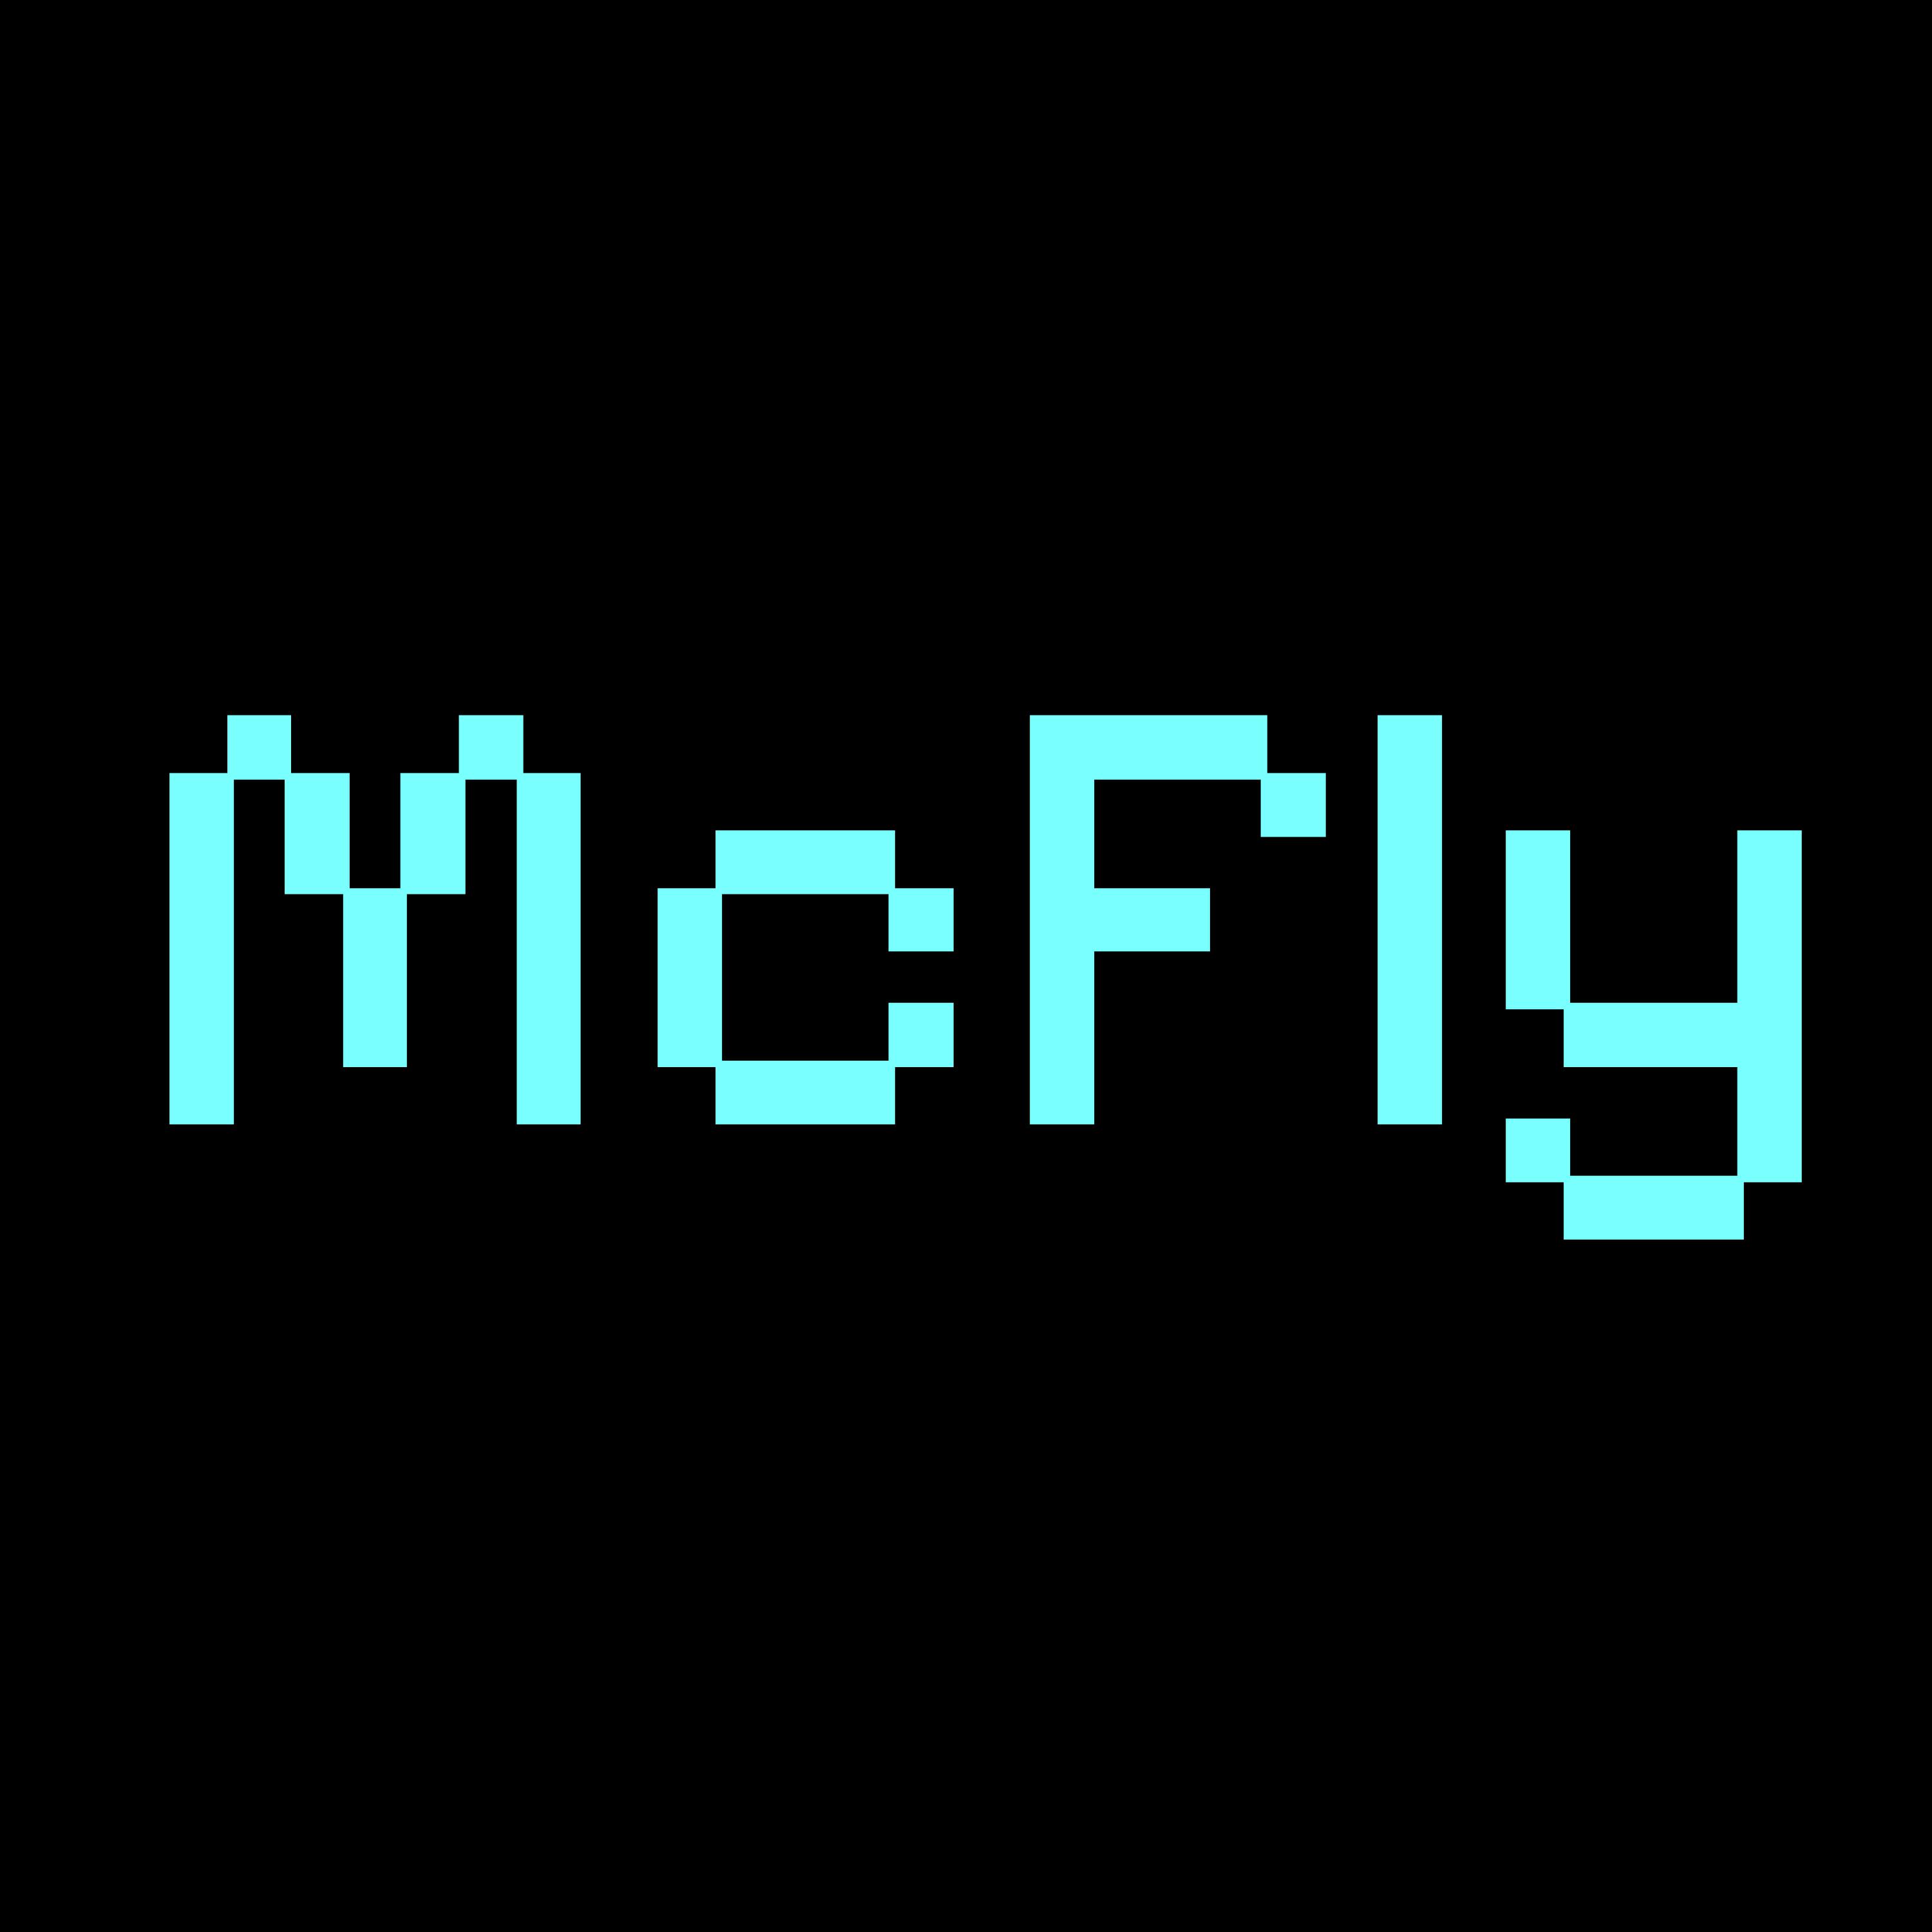 Постер альбома Mc Fly